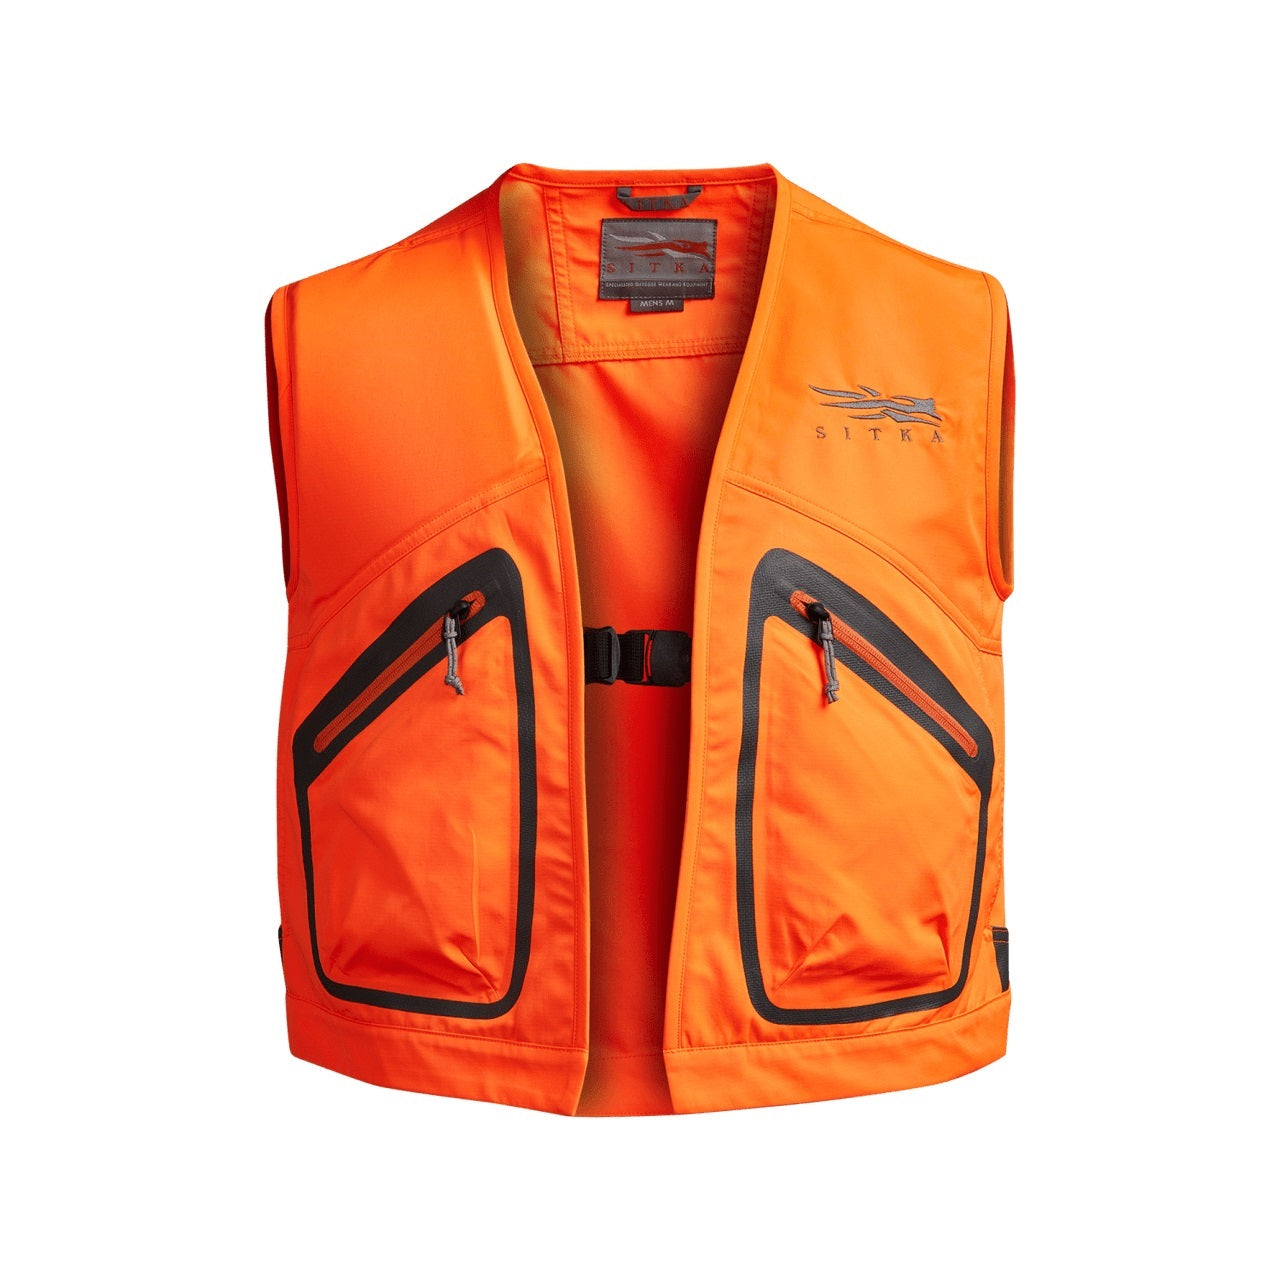 'Sitka' Men's Ballistic Vest - Hunt Solids : Blaze Orange